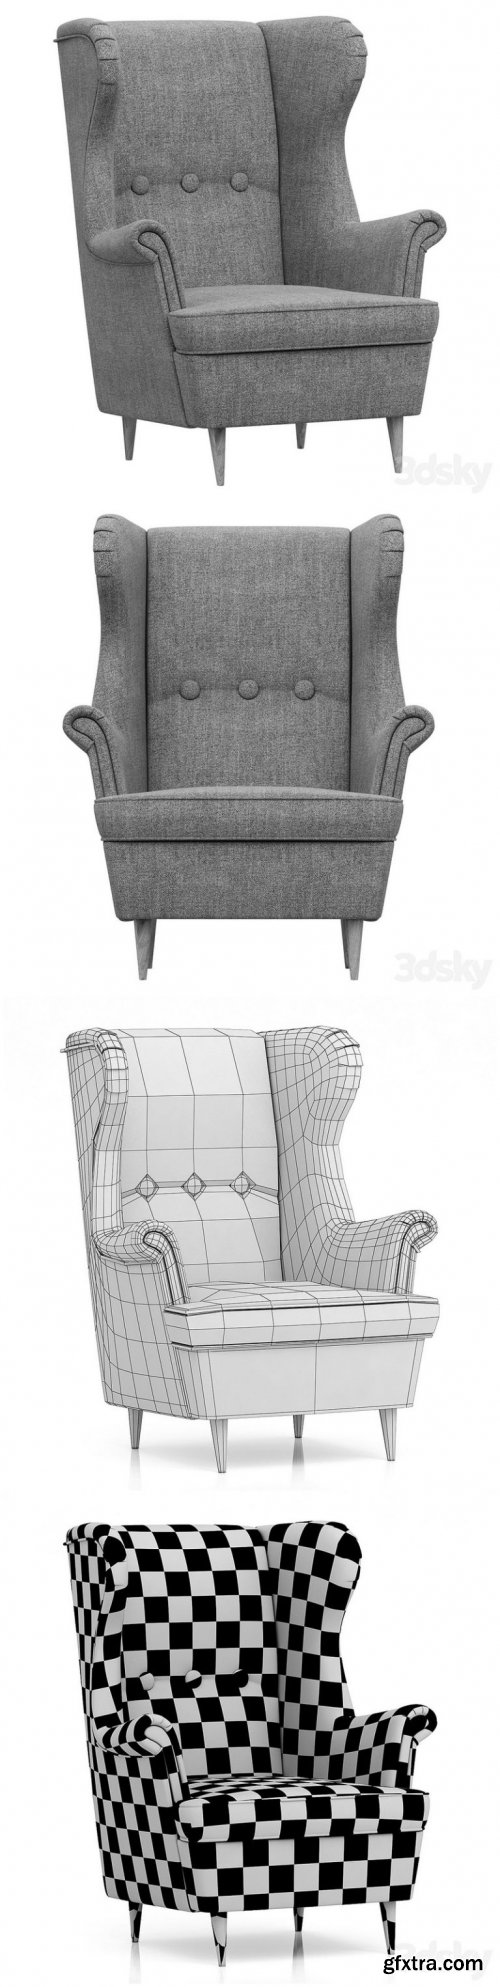 Ikea STRANDMON Children’s armchair